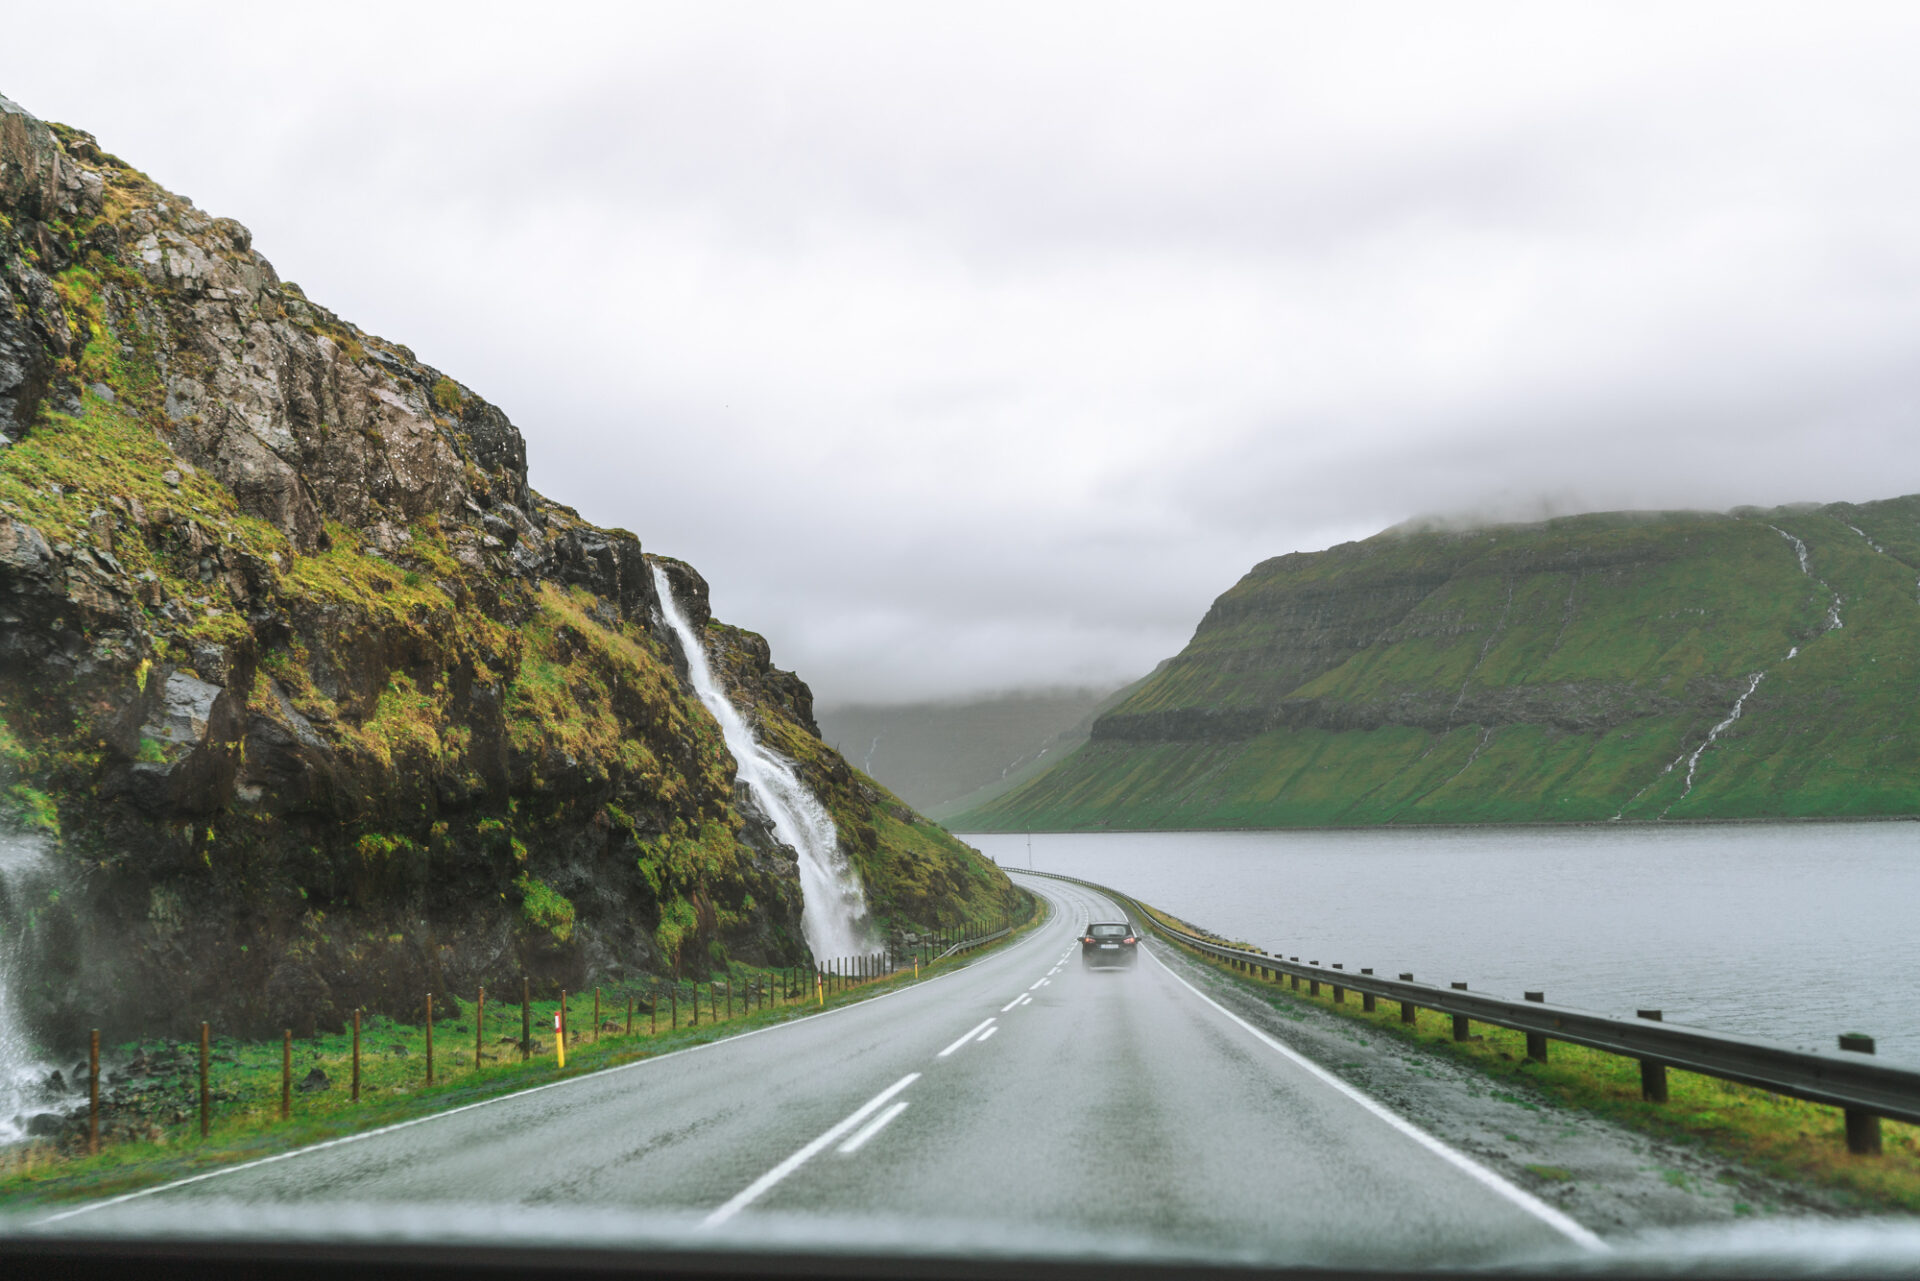 On the road in the Faroe Islands